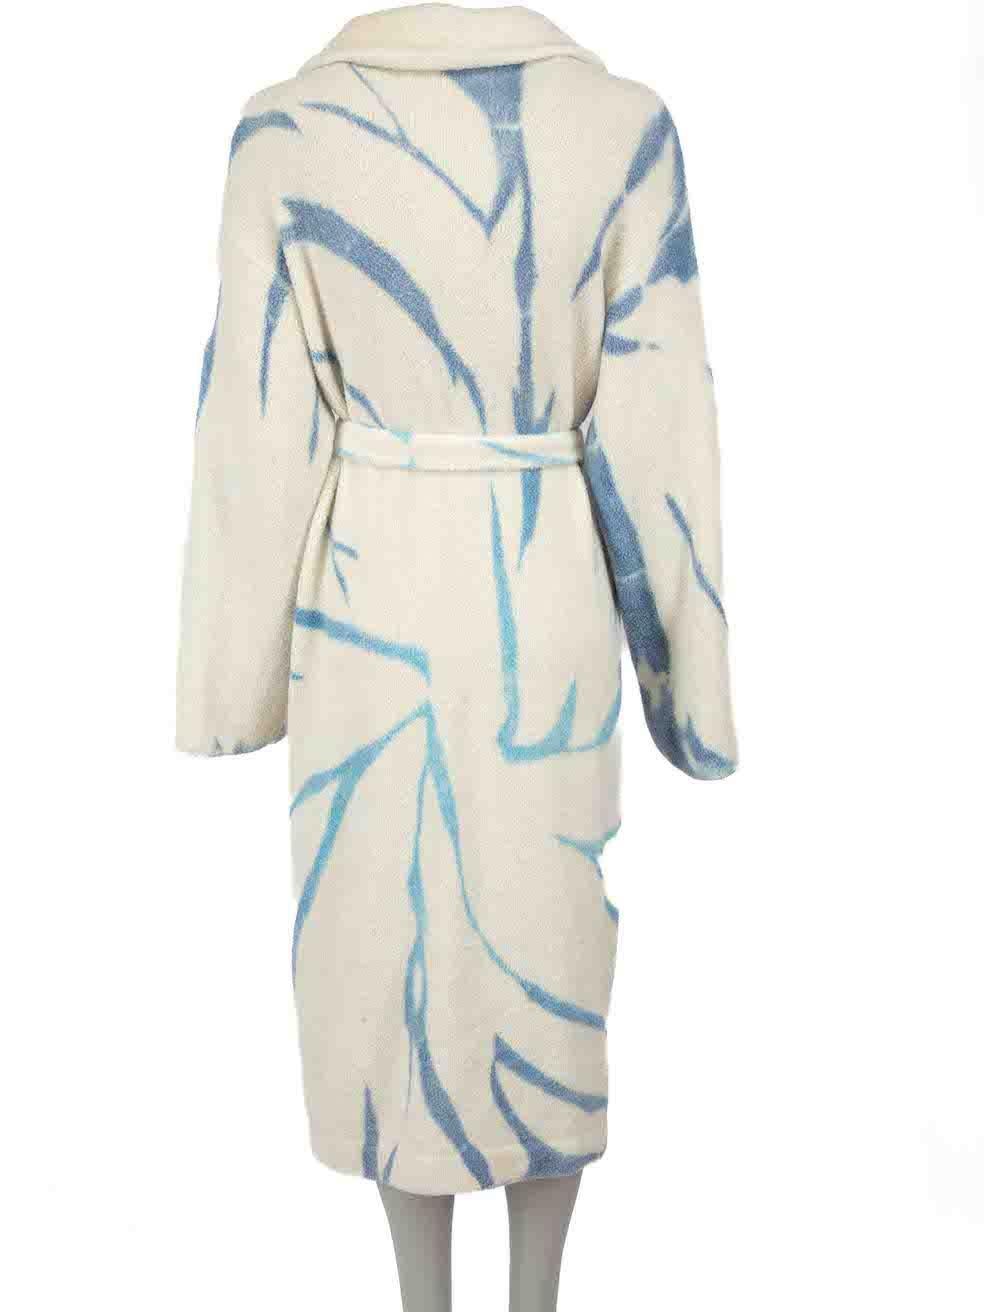 Beige The Elder Statesman Ecru & Blue Abstract Cardigan Size M For Sale